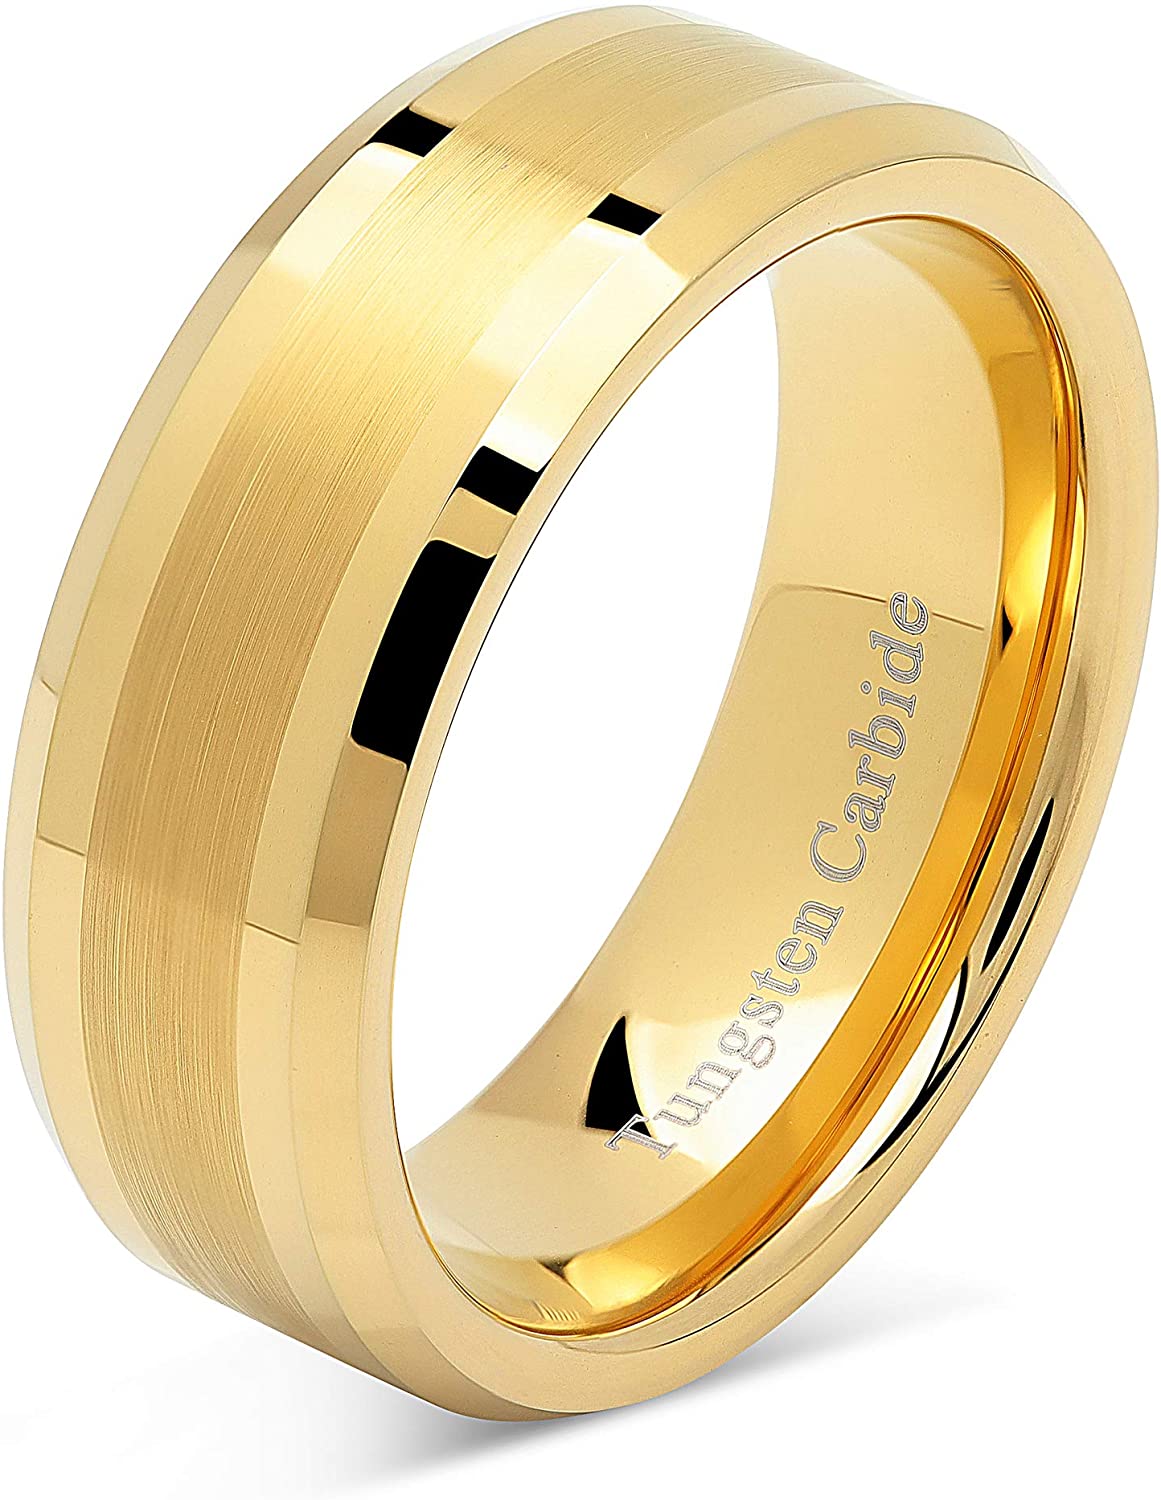 8mm Men's Tungsten Carbide Ring Wedding Band 18k Gold